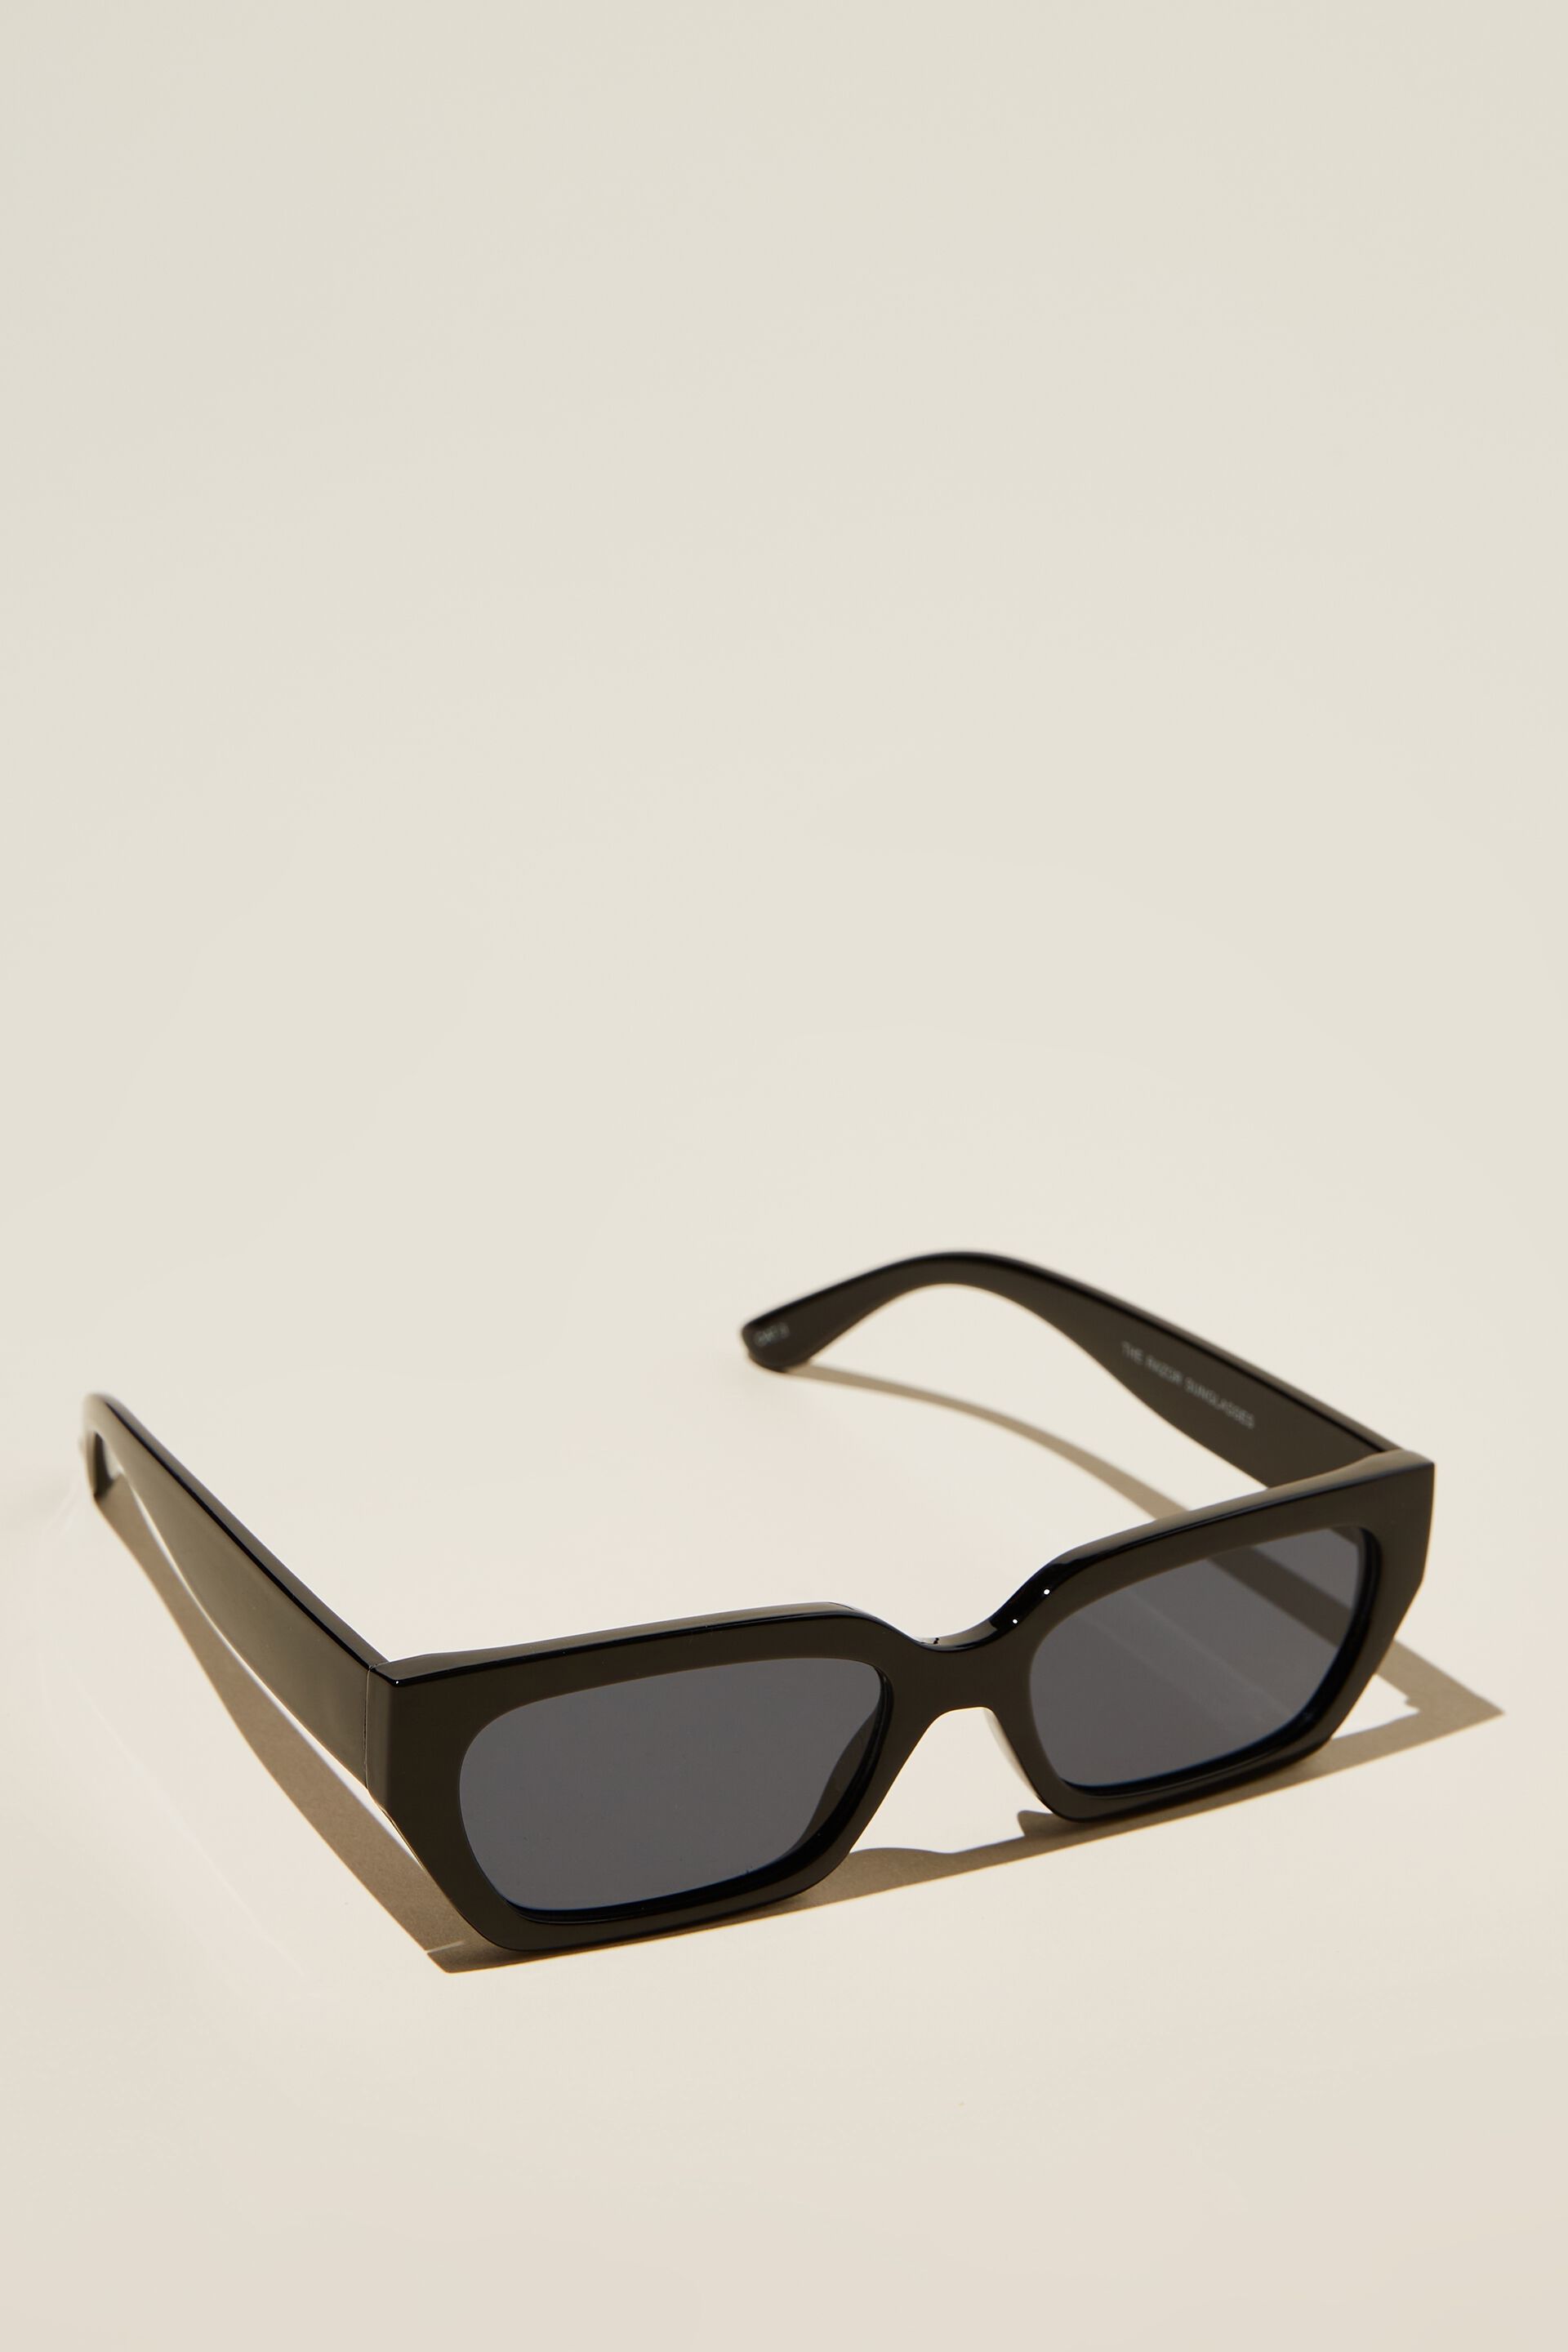 Buy ENRICO Unisex Round Razor Polarized UV Protected Sunglasses Black  Frame, Black Lens, Pack of 1 at Amazon.in